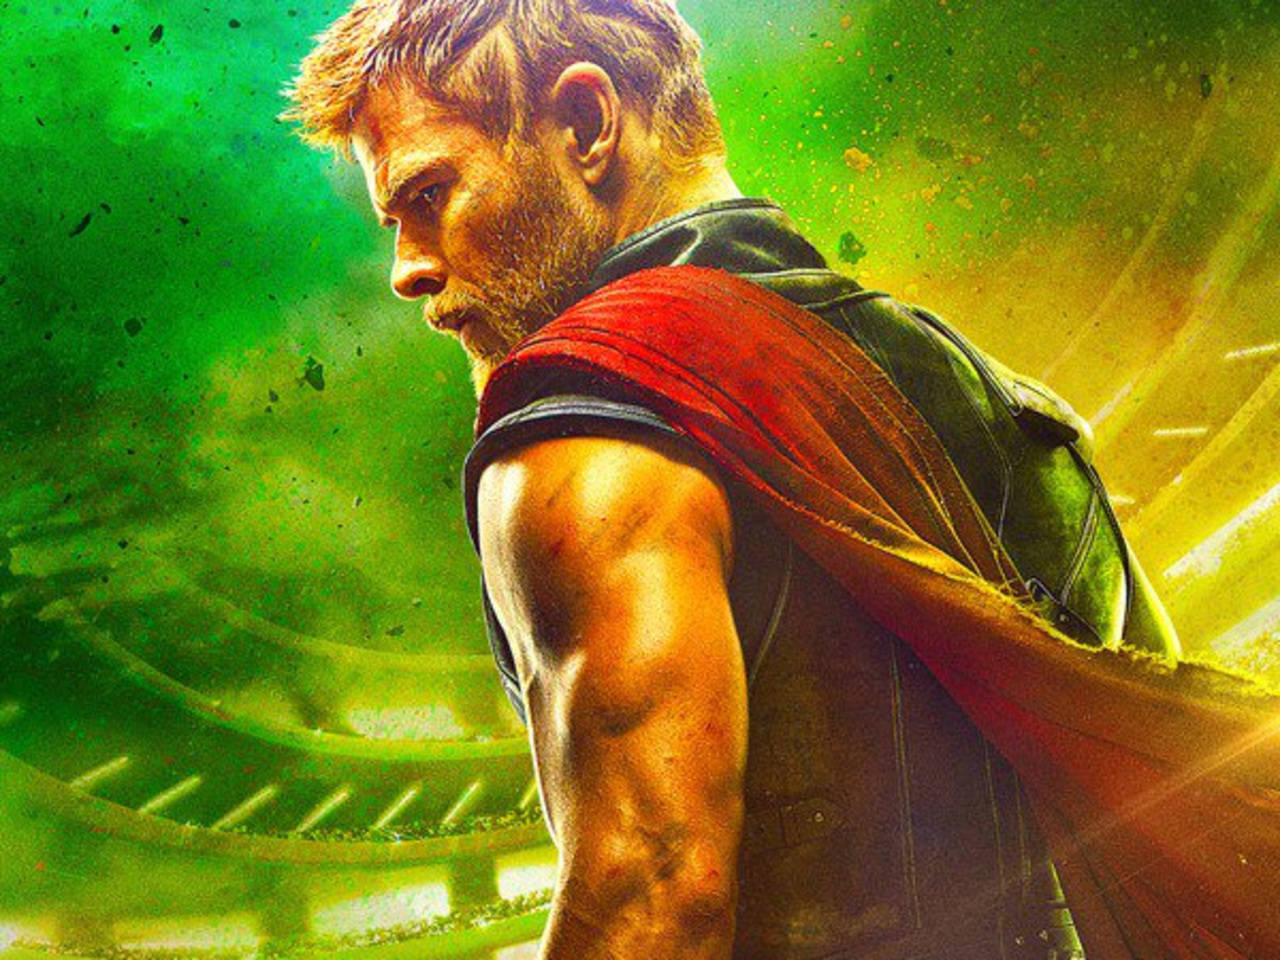 Hulk Vs. Thor: Banner of War Alpha #1 first impressions: 